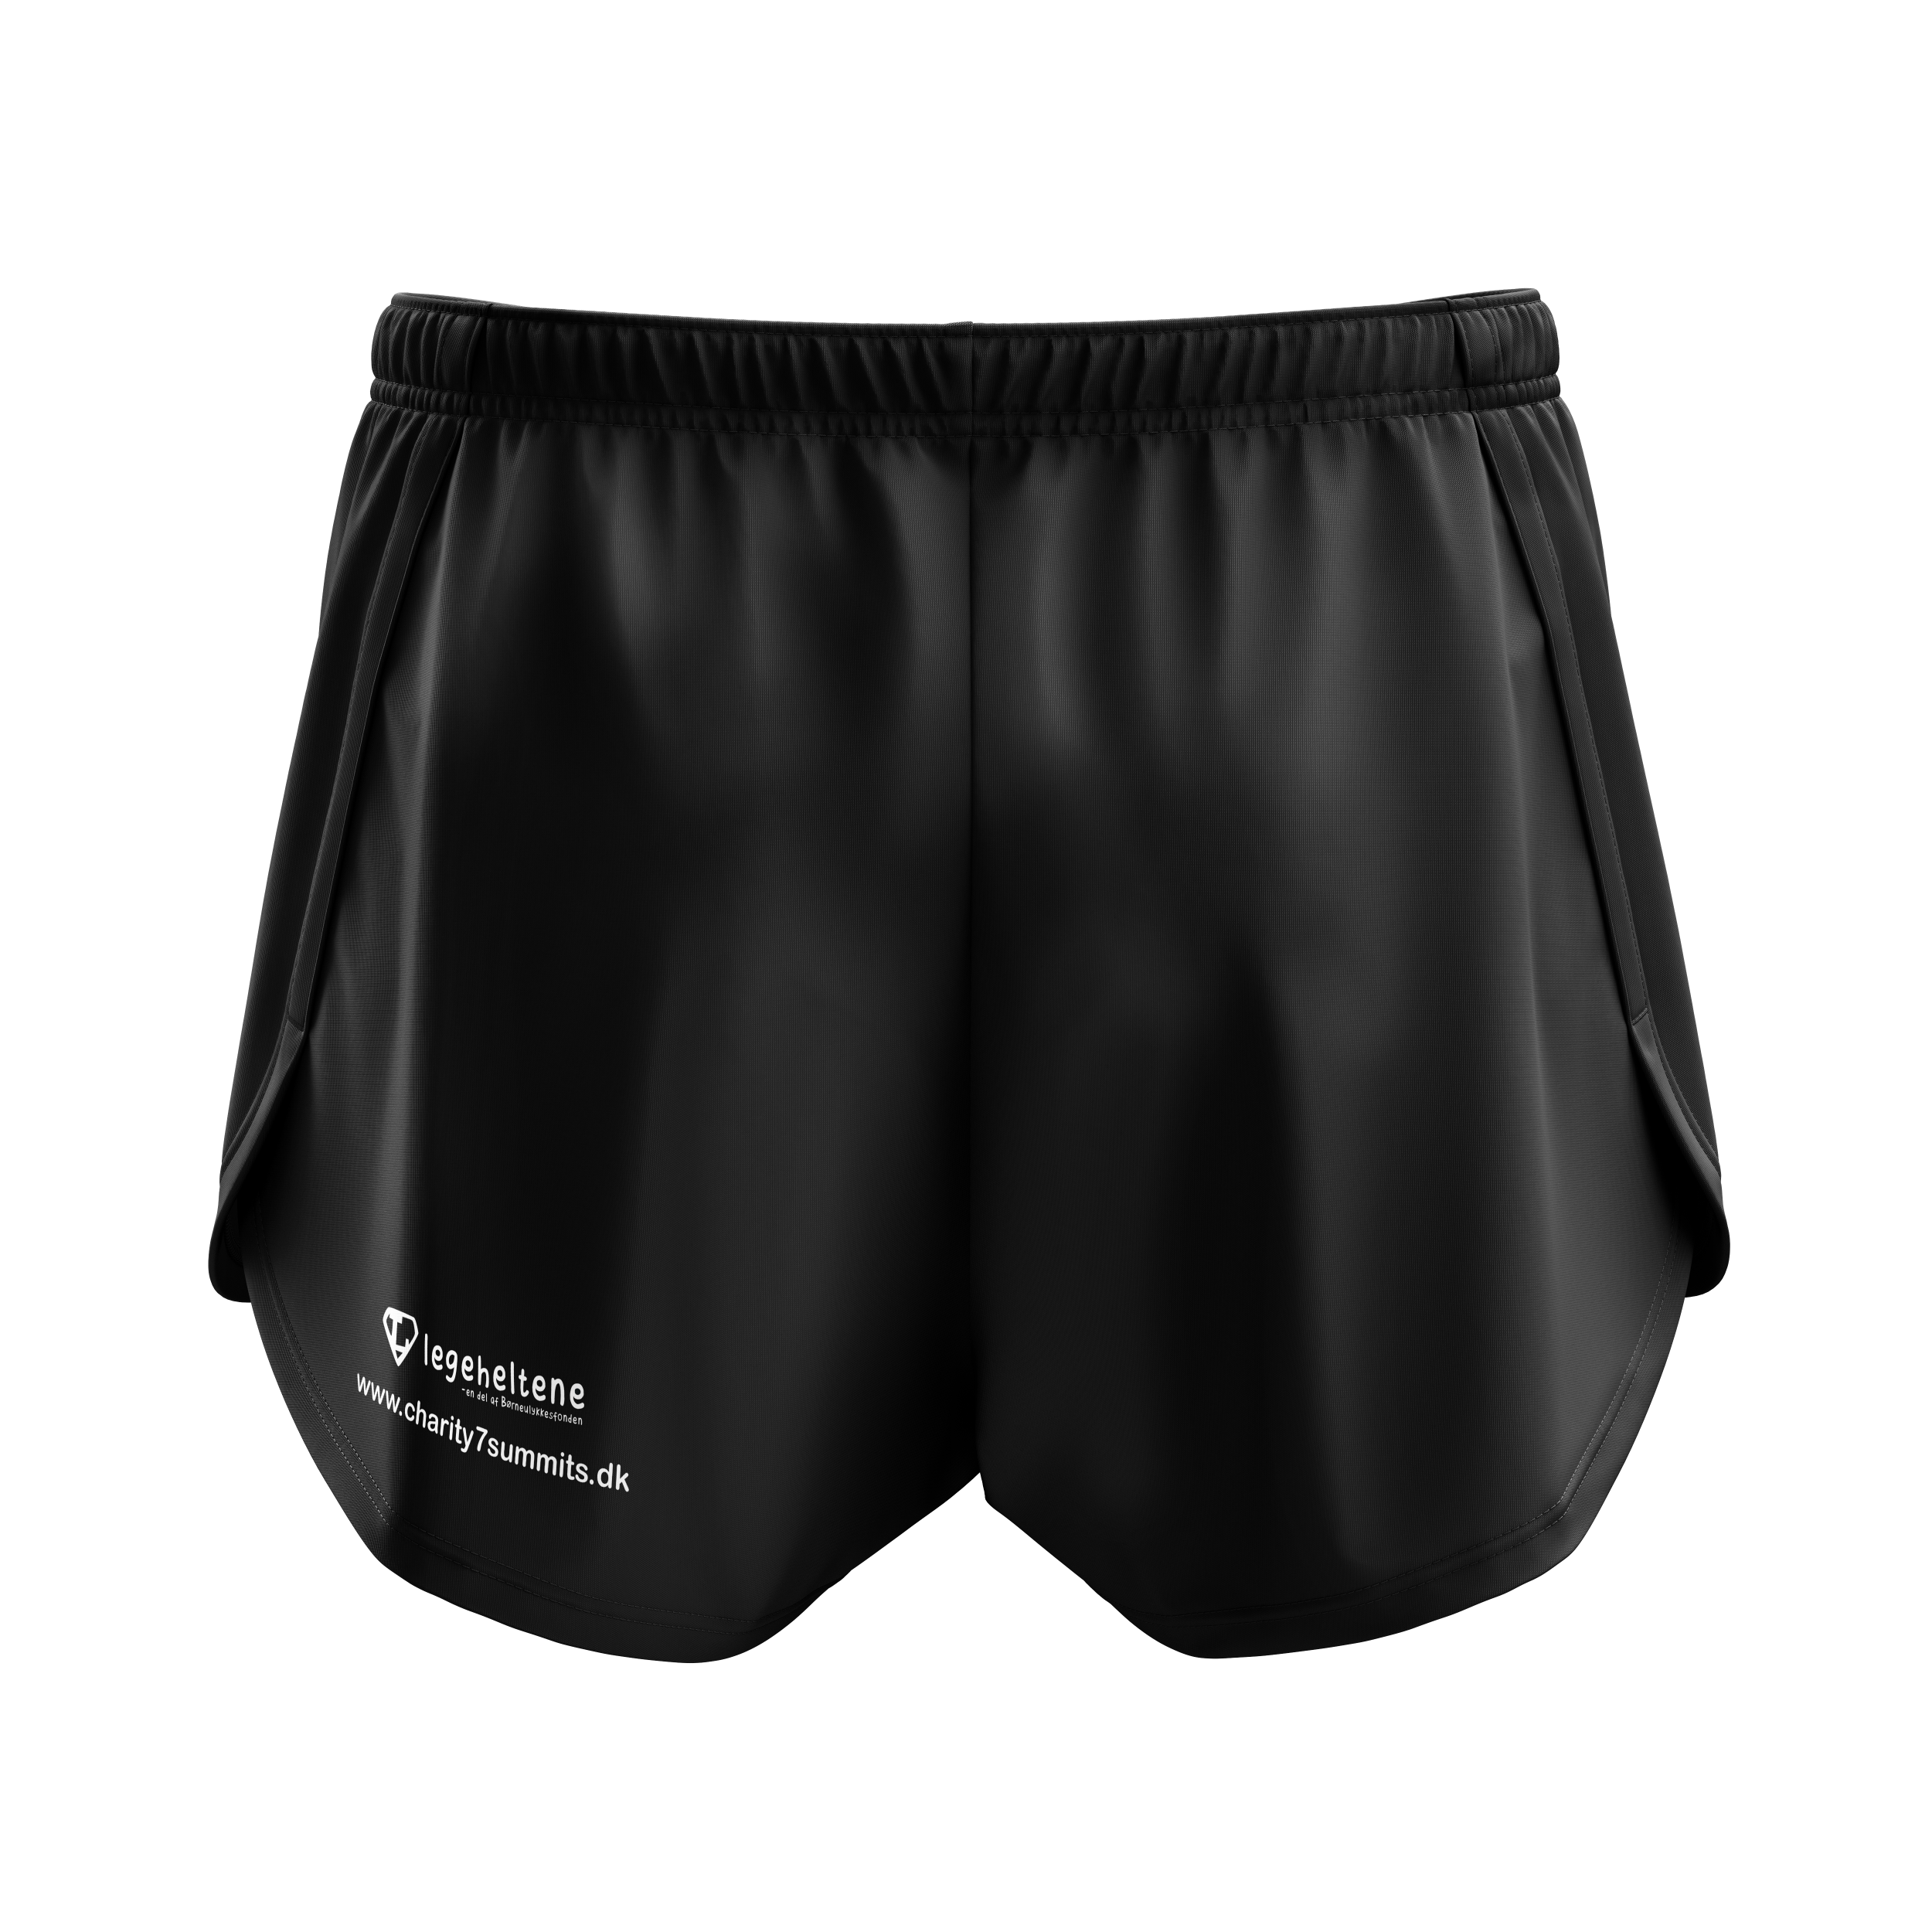 Charity7summits Shorts